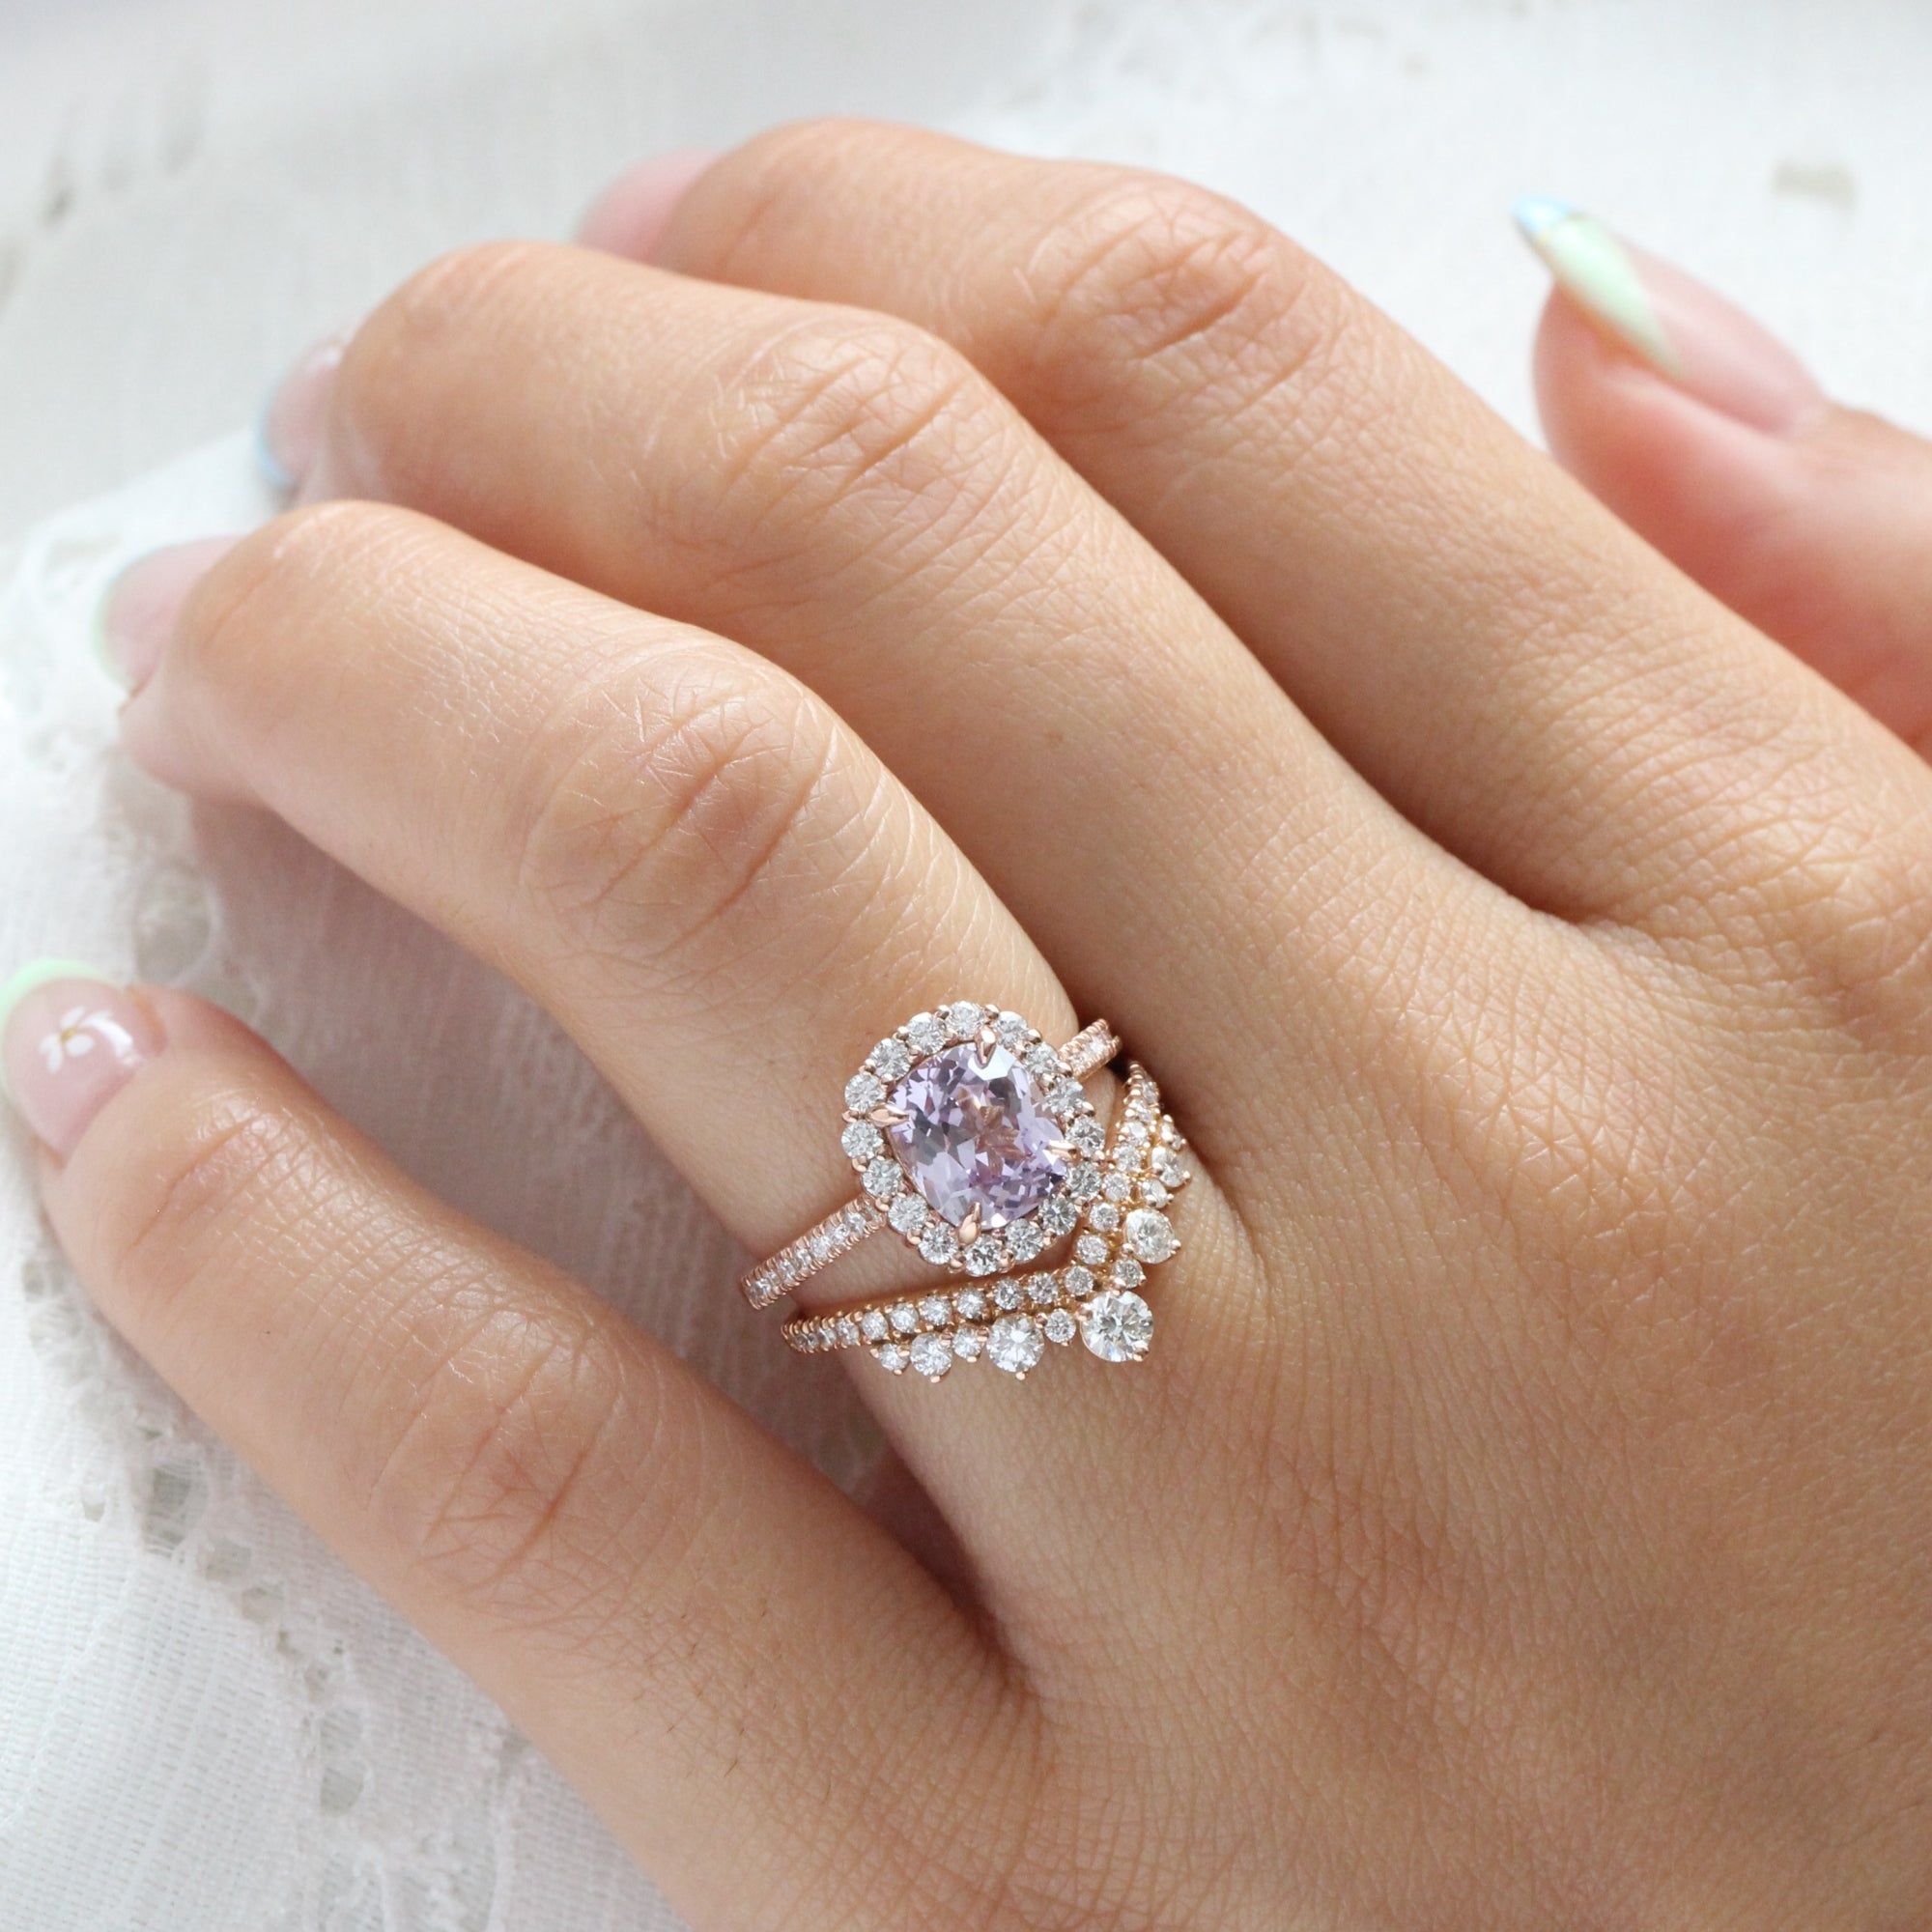 Cushion lavender sapphire ring rose gold halo diamond purple sapphire pave ring la more design jewelry